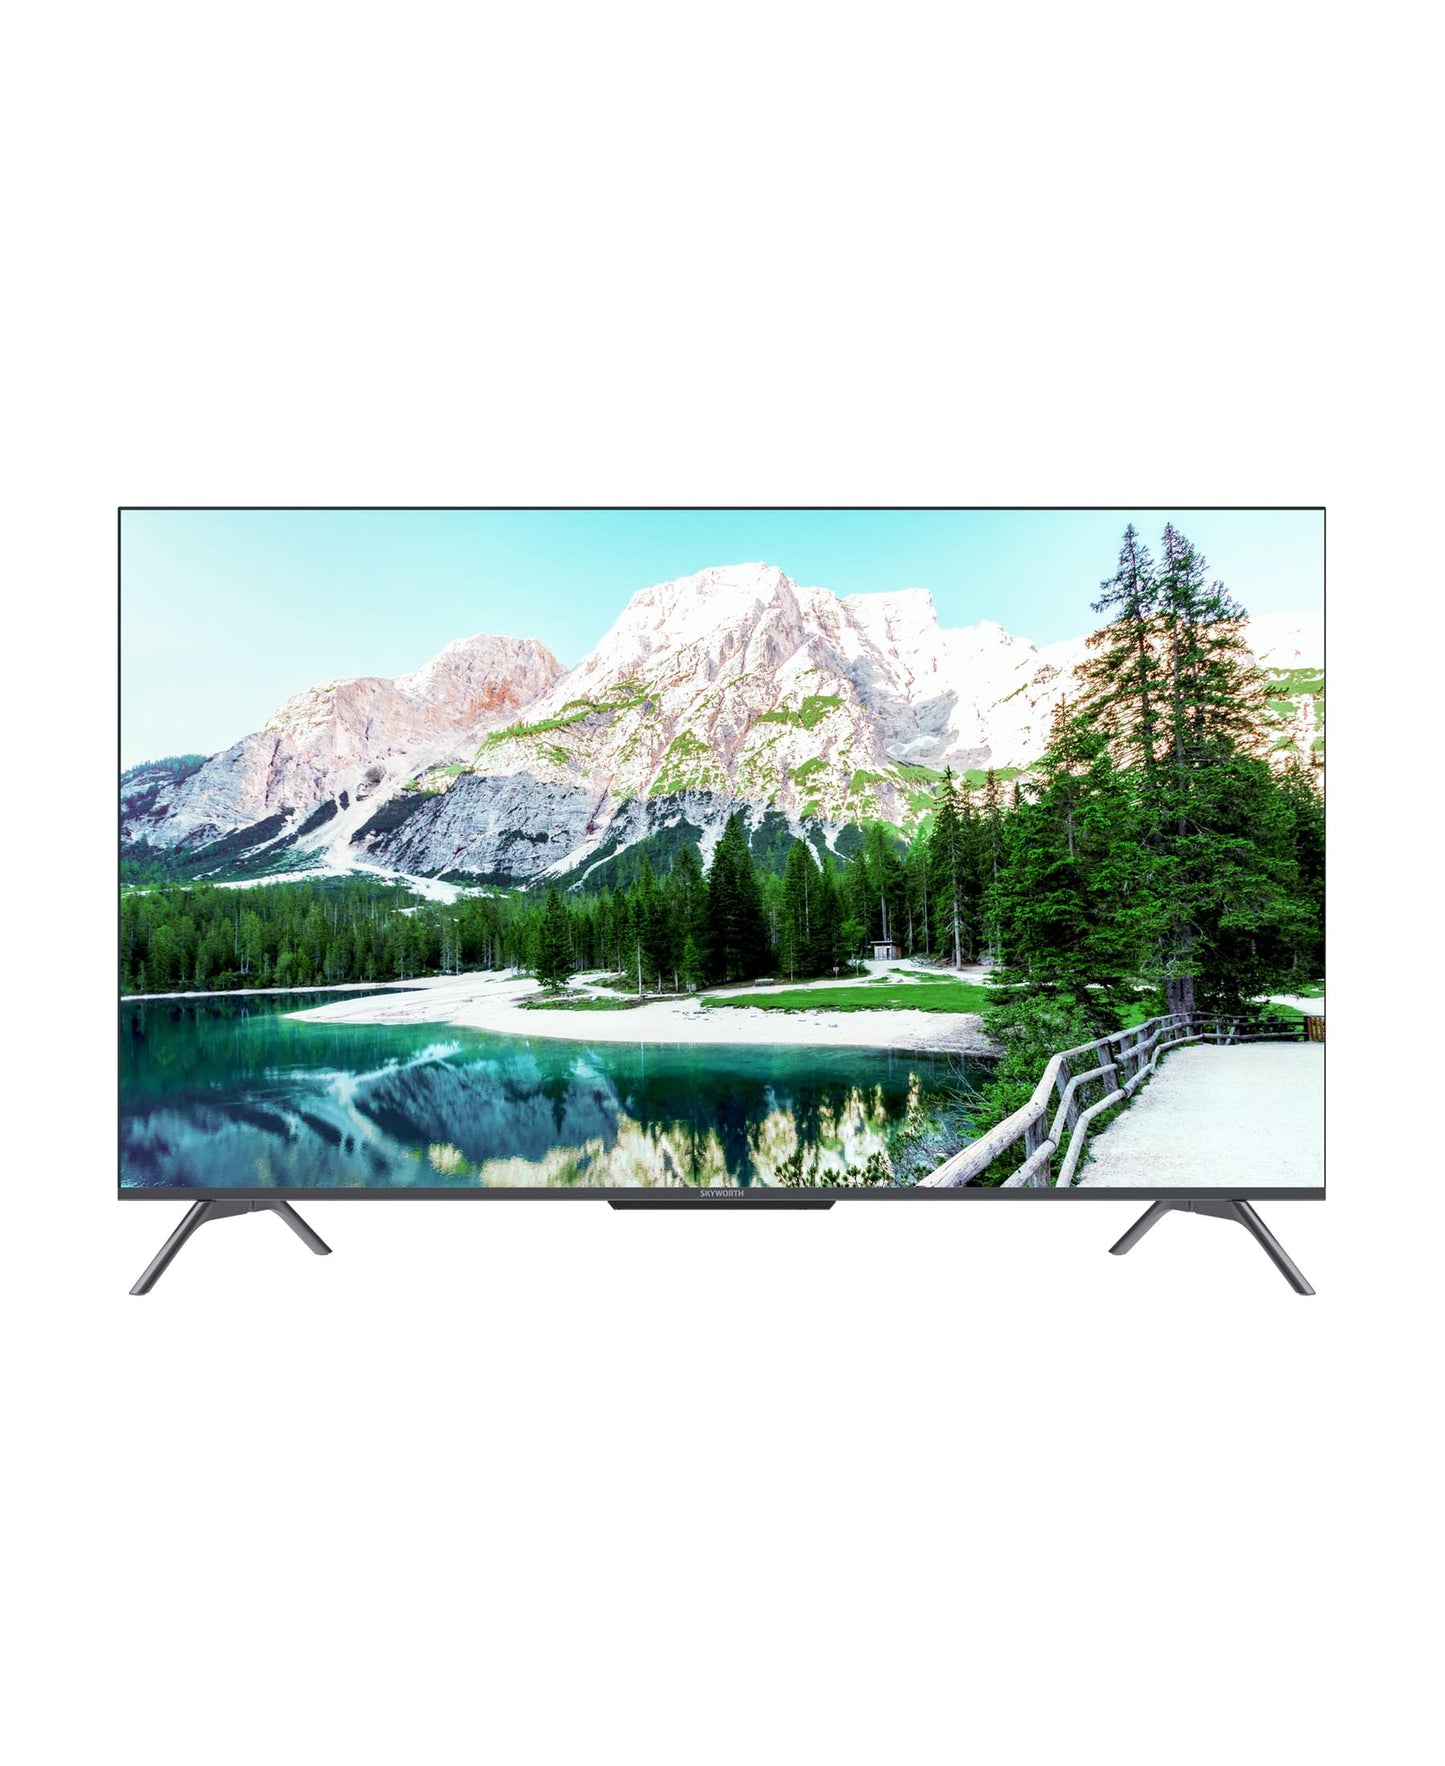 Smart TV Skyworth 50 4K LED HD Android TV